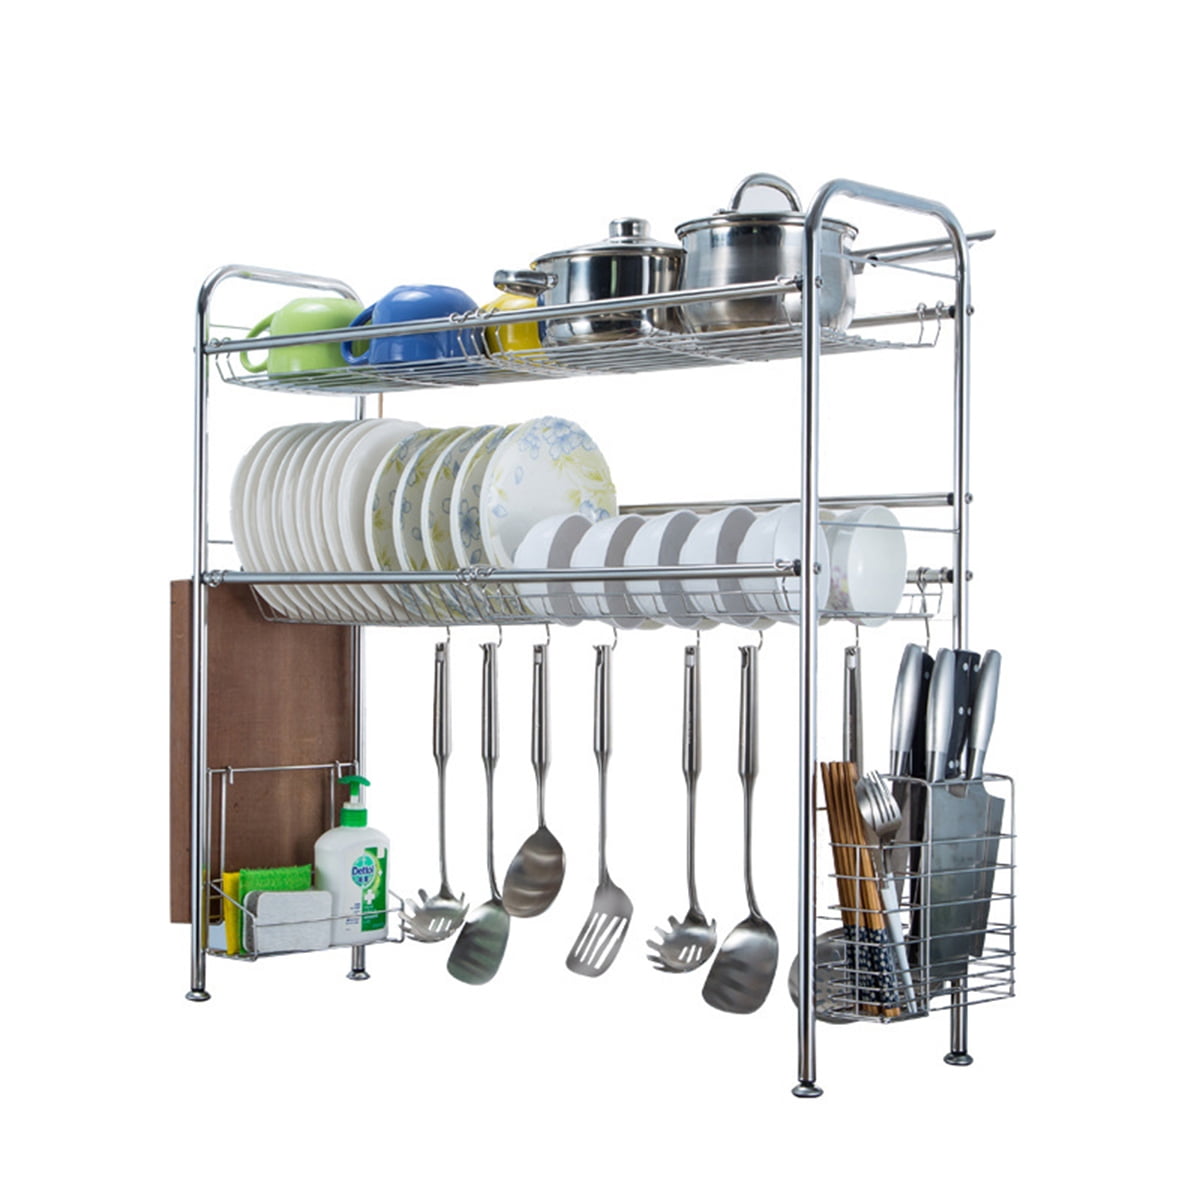 Details about   Adjustable Dish Drying Rack Over the Sink Drainer Dryer Kitchen Holder Organizer 